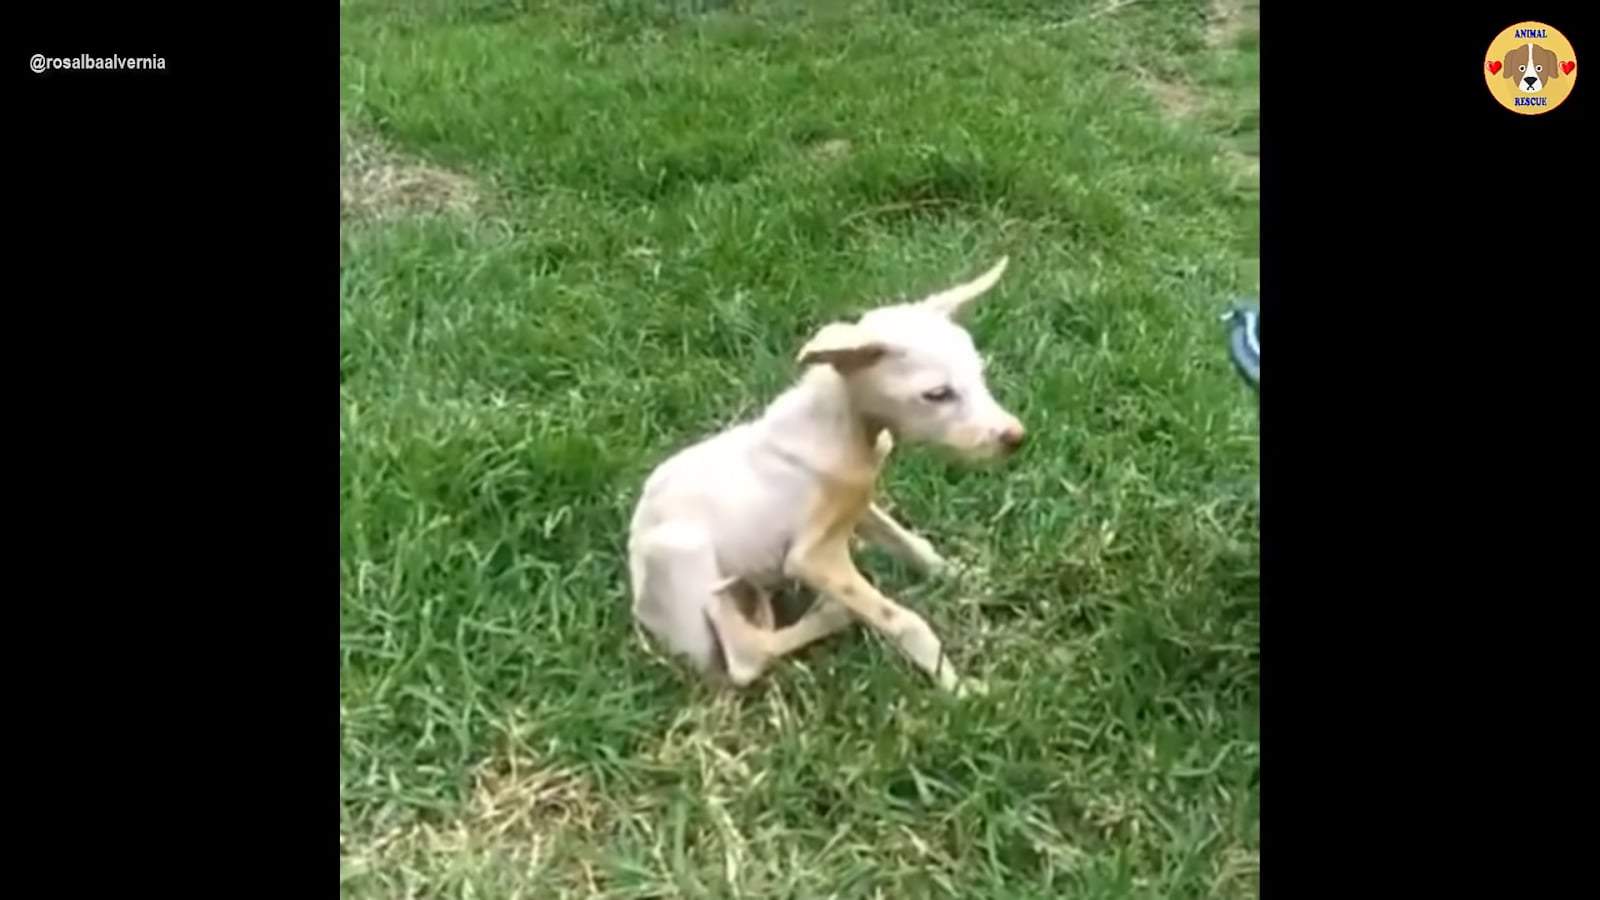 sad little dog on the grass